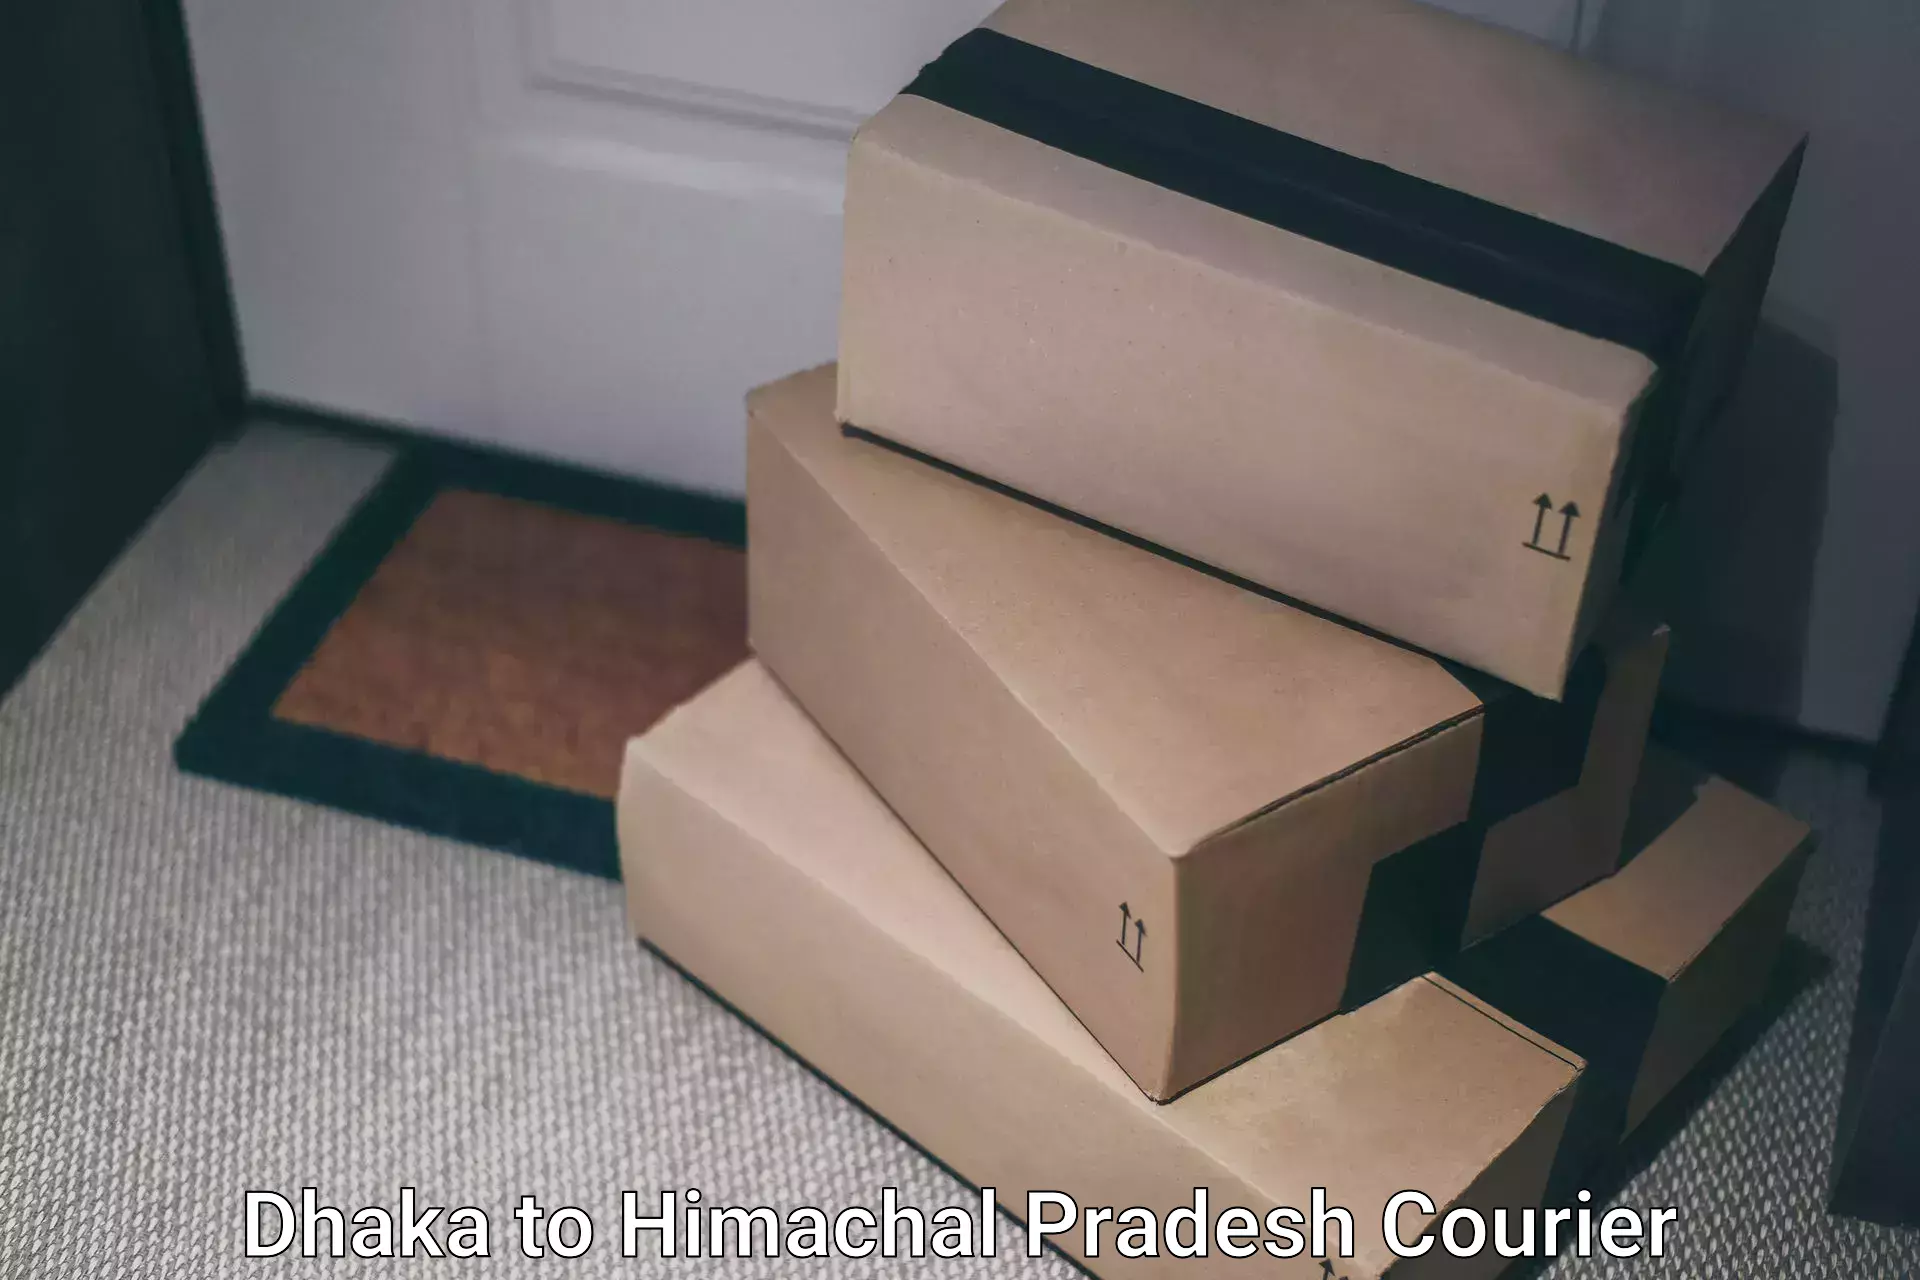 Global courier networks Dhaka to Himachal Pradesh